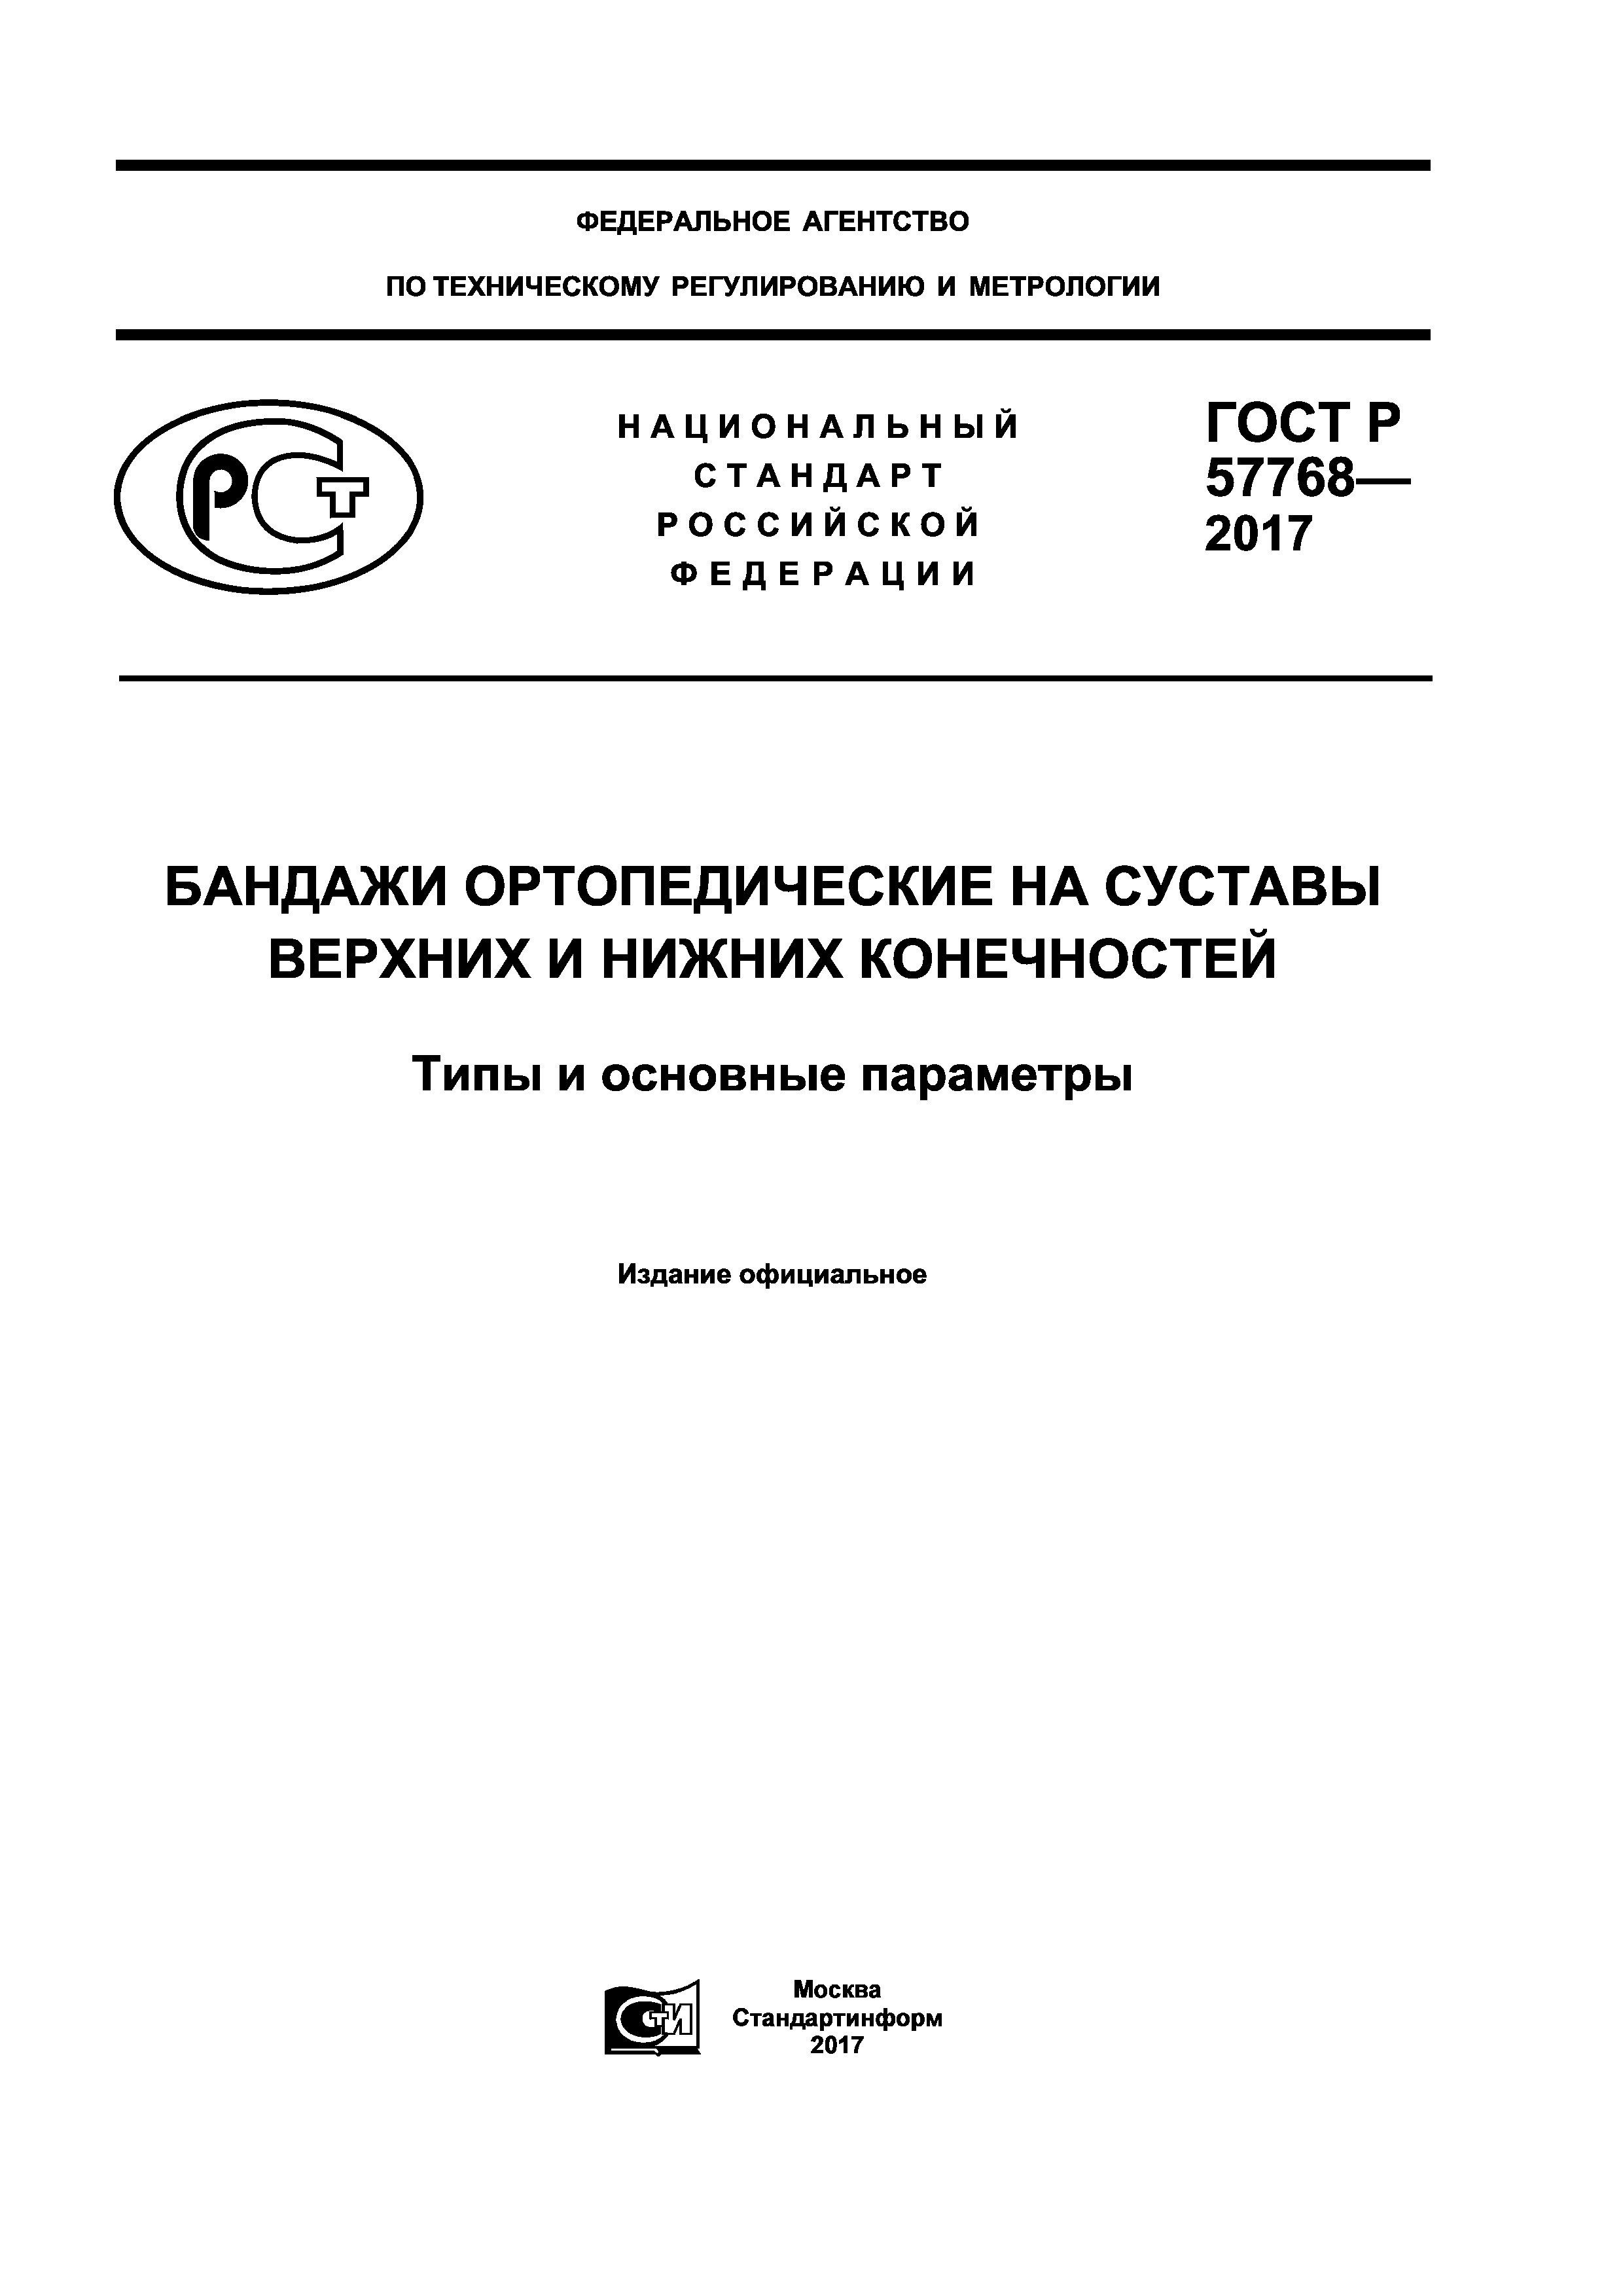 ГОСТ Р 57768-2017